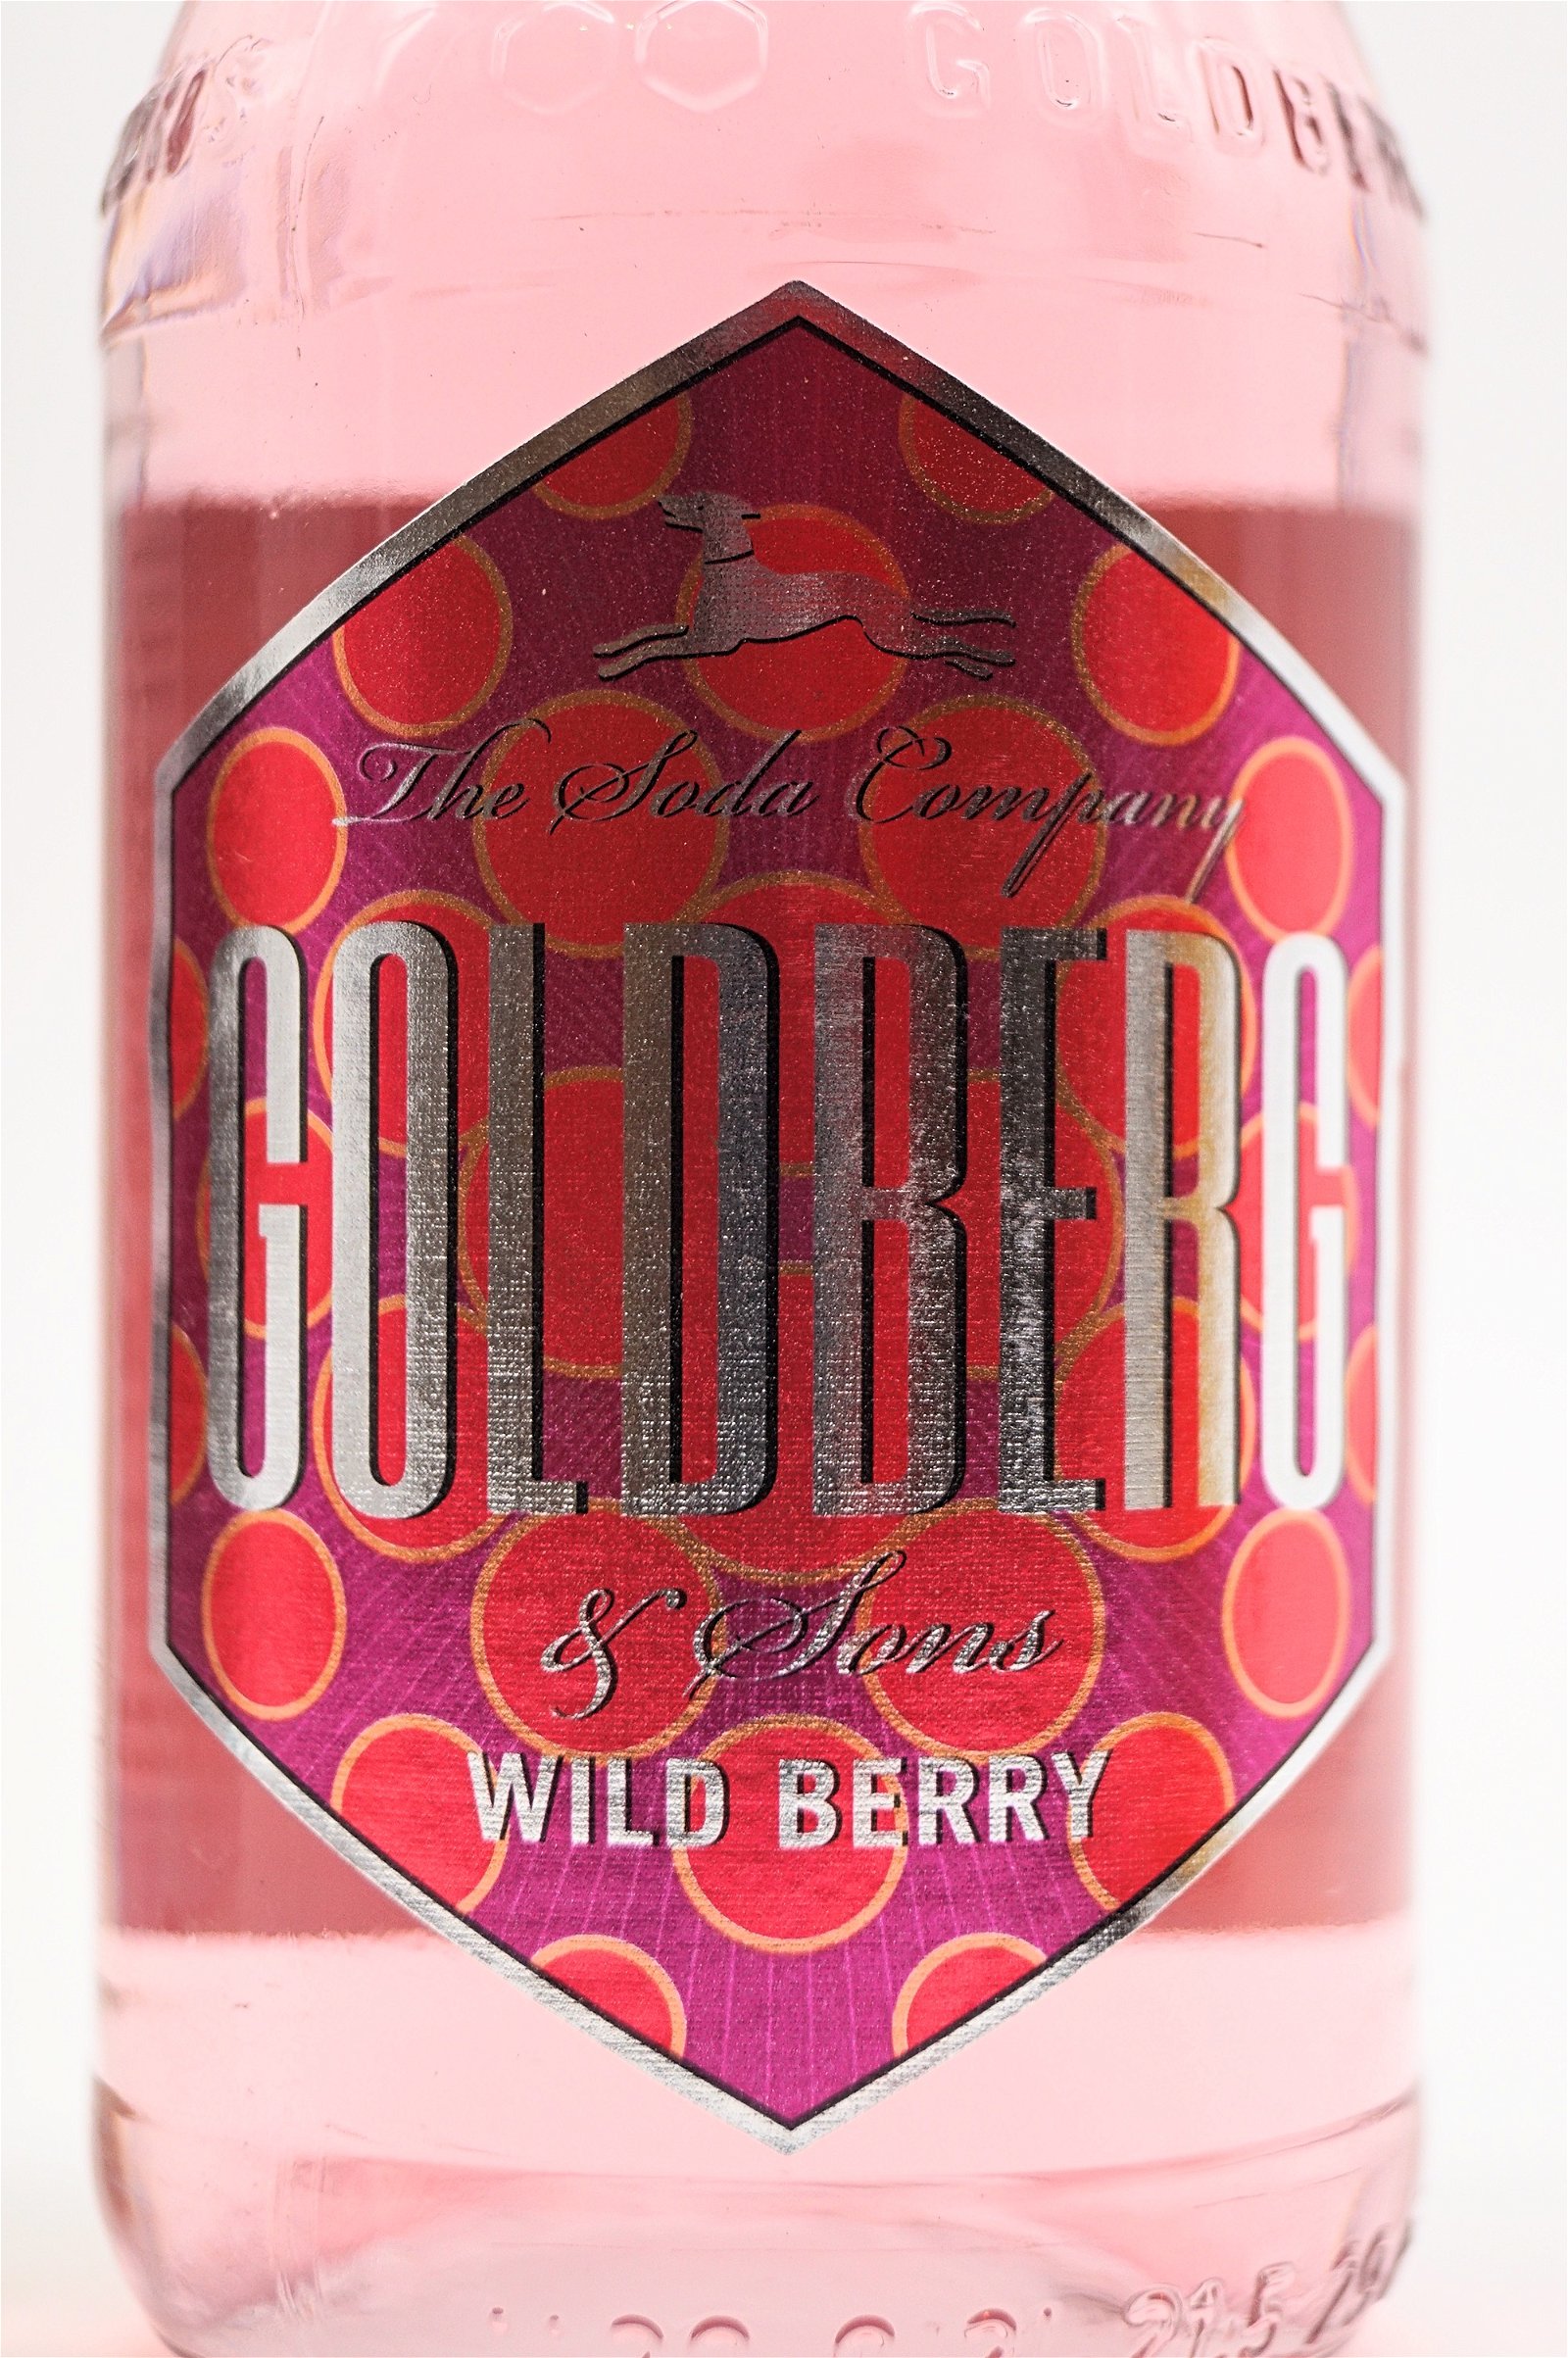 Goldberg & Sons Wild Berry 